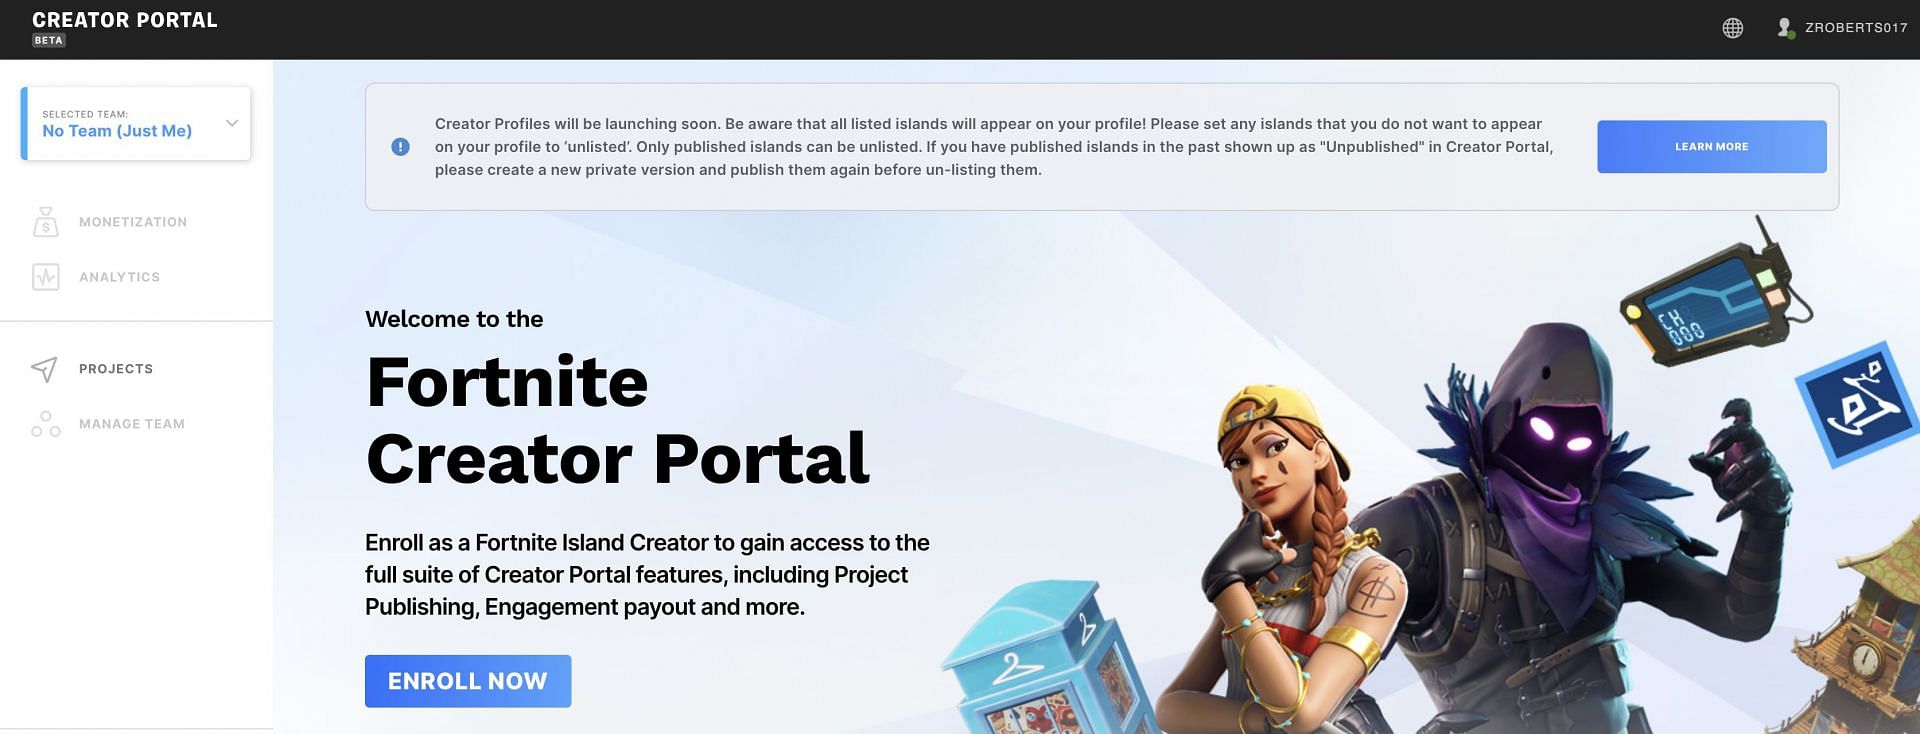 Fortnite Creator Portal